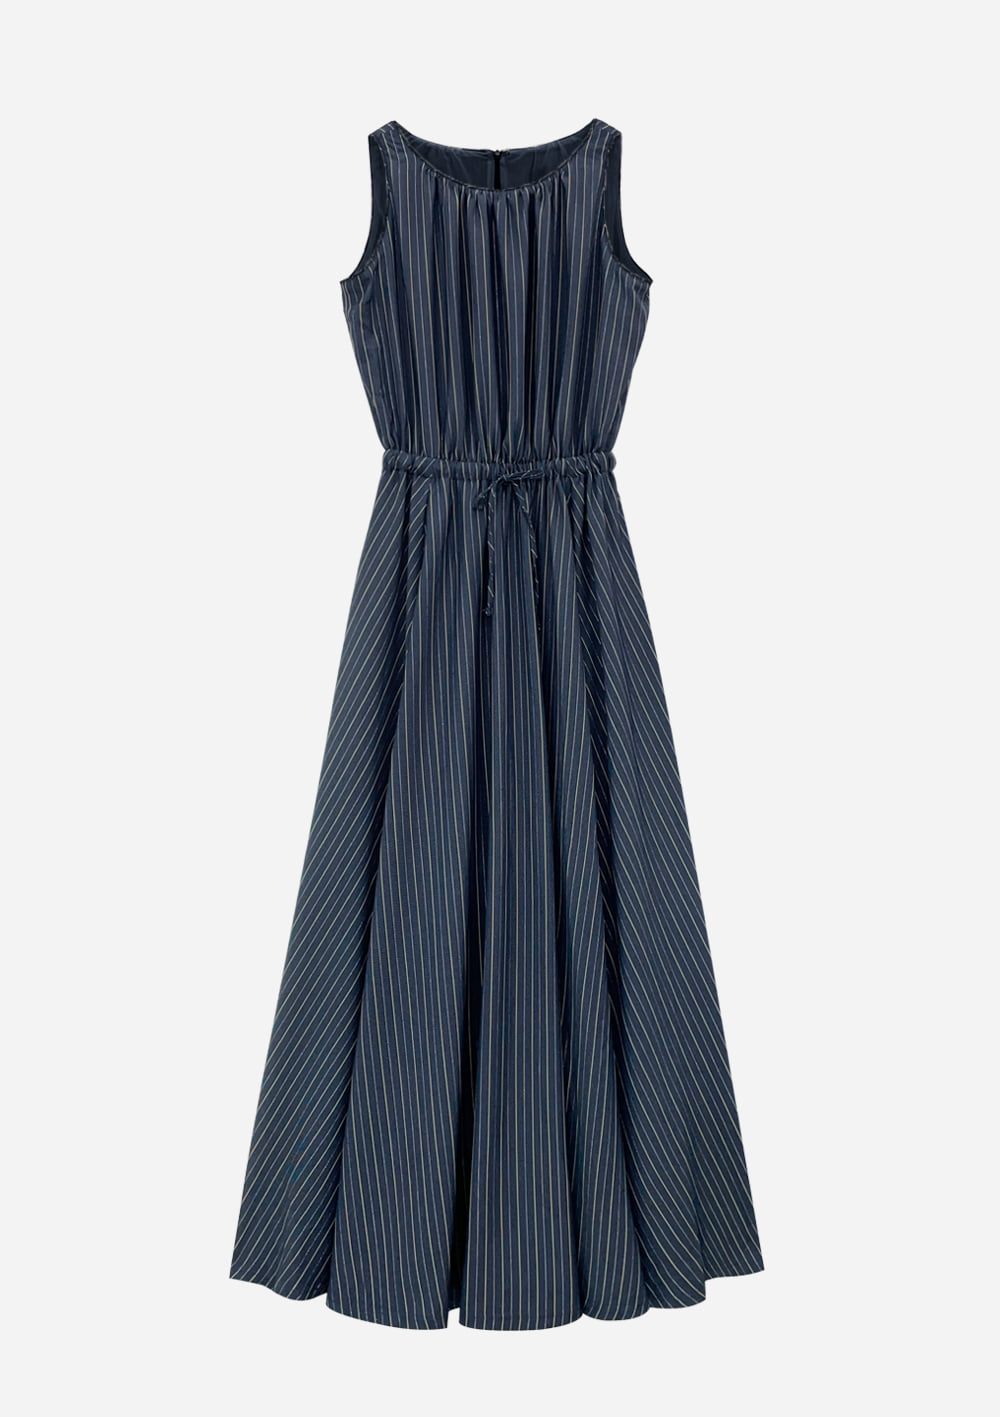 [EXCLUSIVE] Italy Athens stripe dress